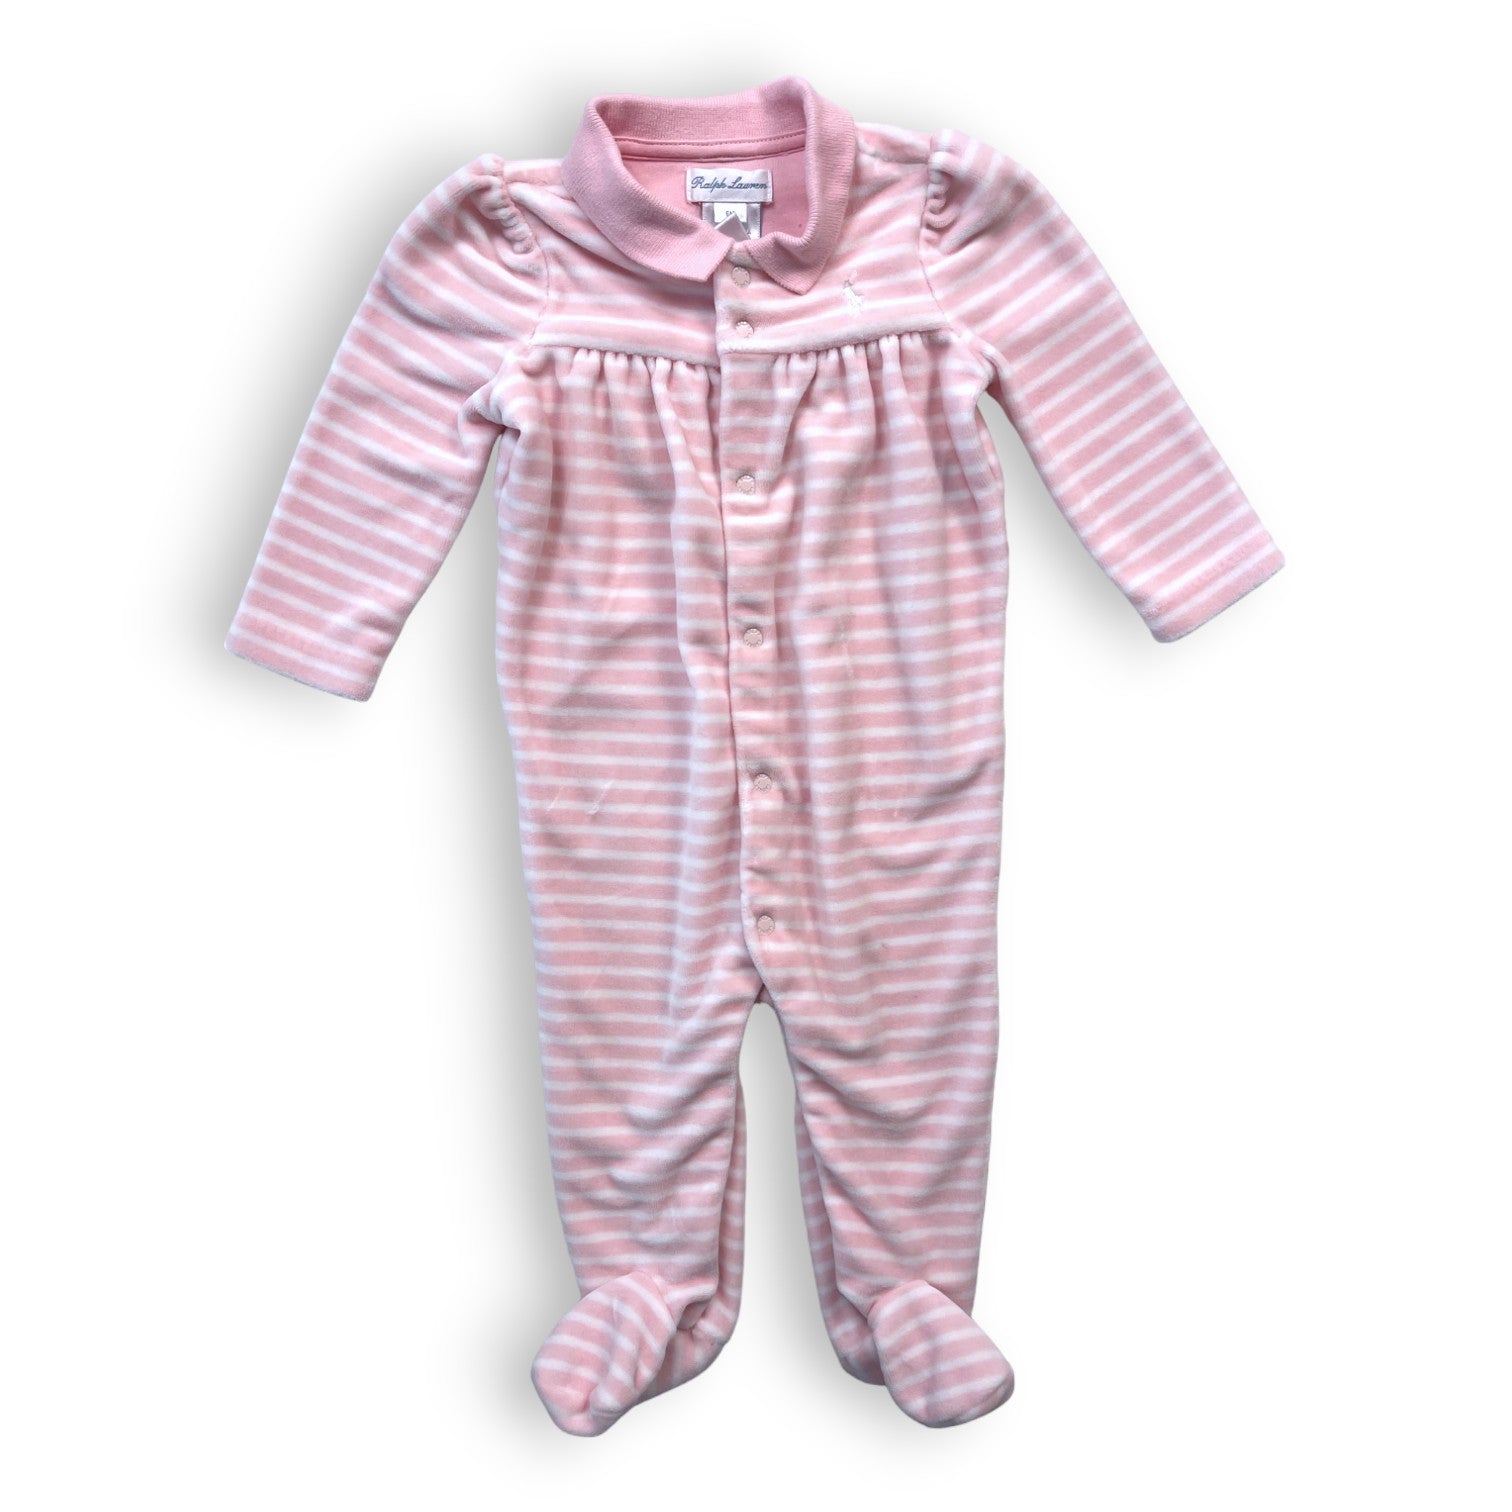 RALPH LAUREN - Pyjama en velours rayé rose et blanc - 6 mois